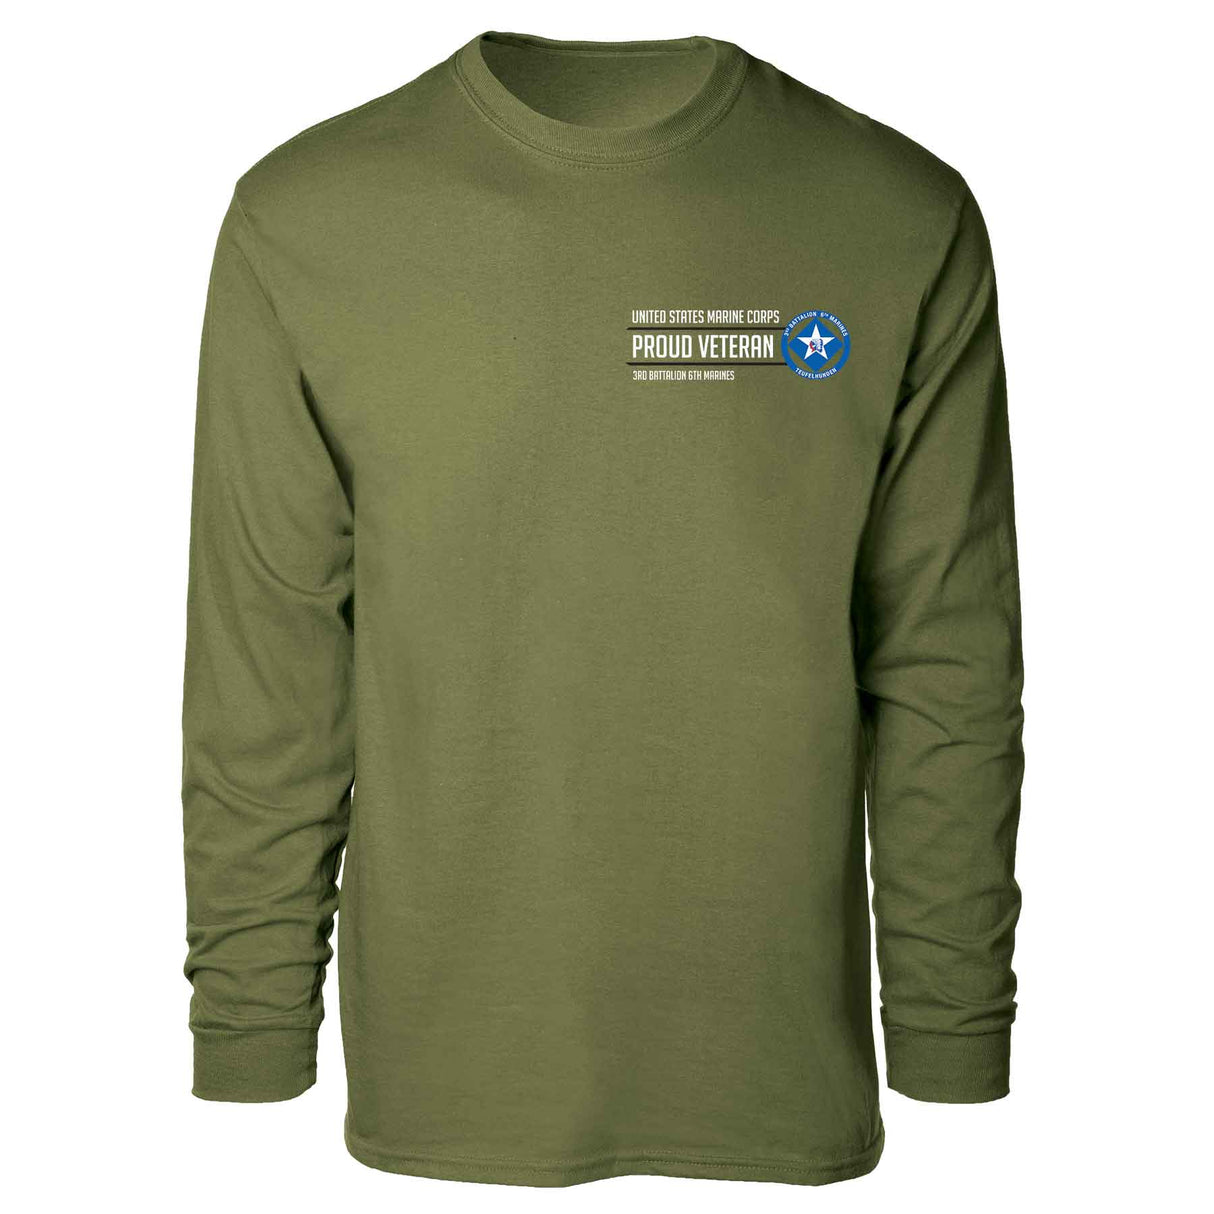 3rd Battalion 6th Marines Proud Veteran Long Sleeve T-shirt - SGT GRIT